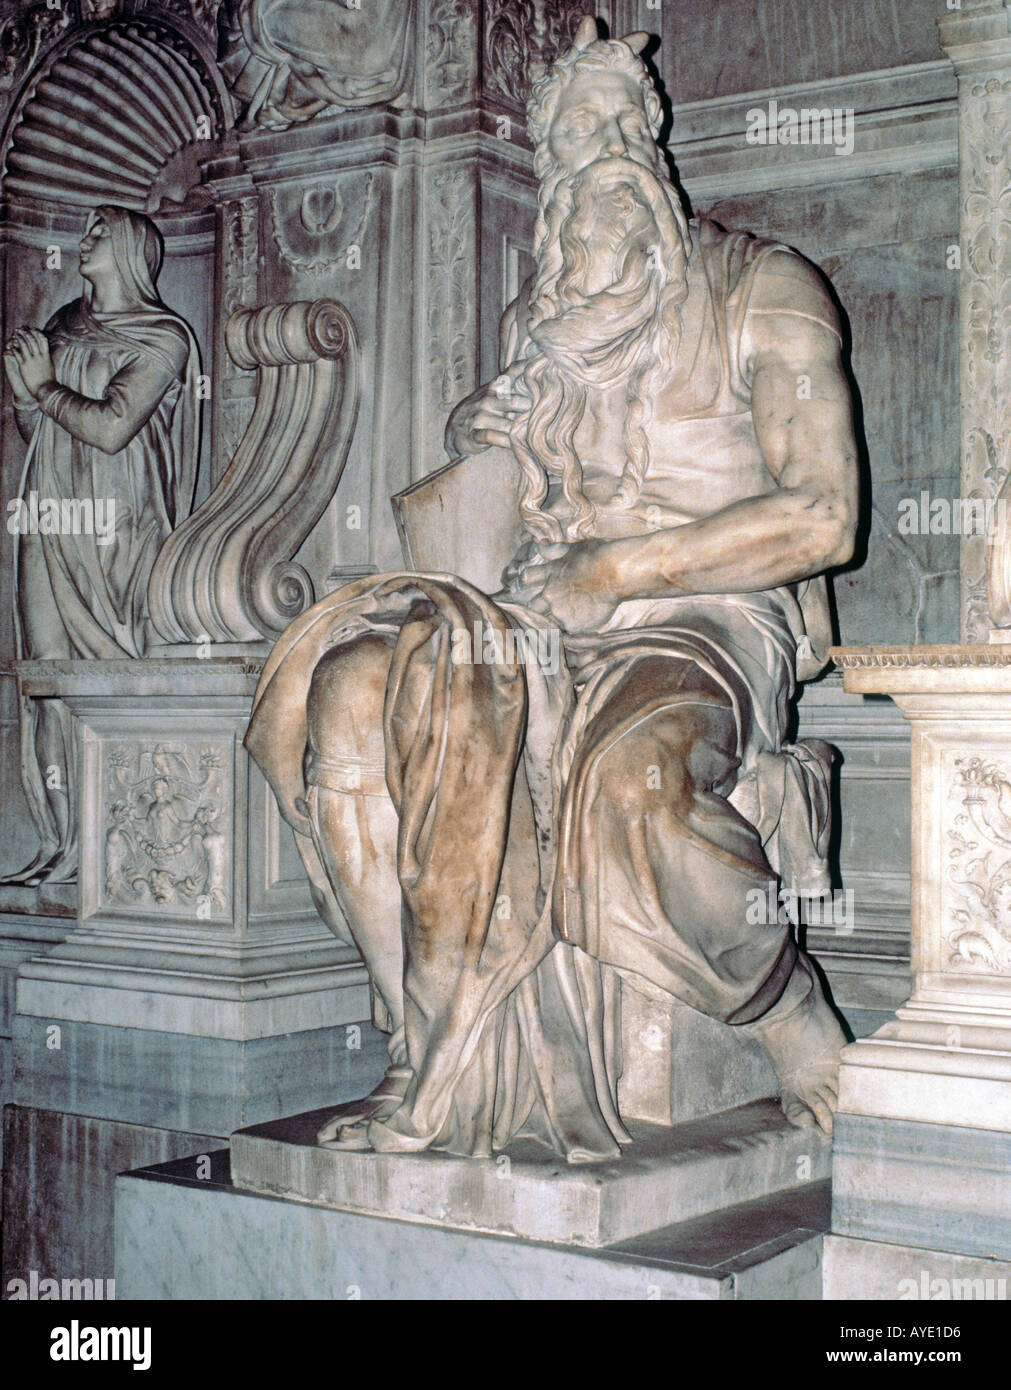 Rome Italy Statue of Moses Receiving Ten Commandments by Michelangelo Buonarroti in San Pietro in Vincoli church Stock Photo